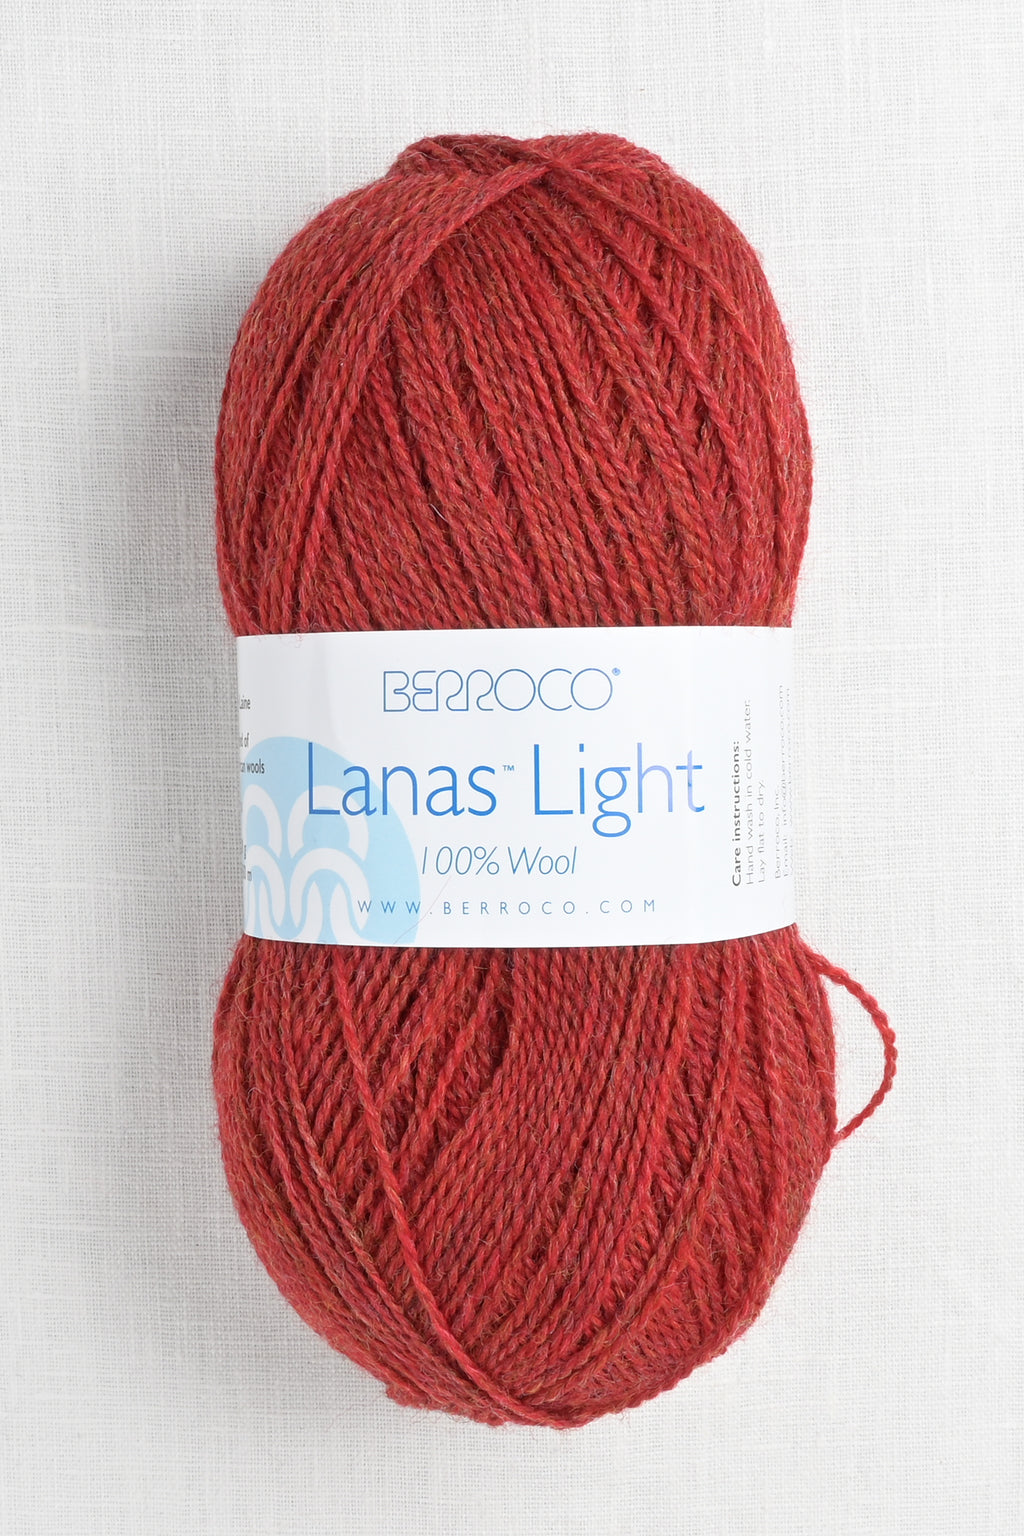 Berroco Lanas Light 78126 Cayenne